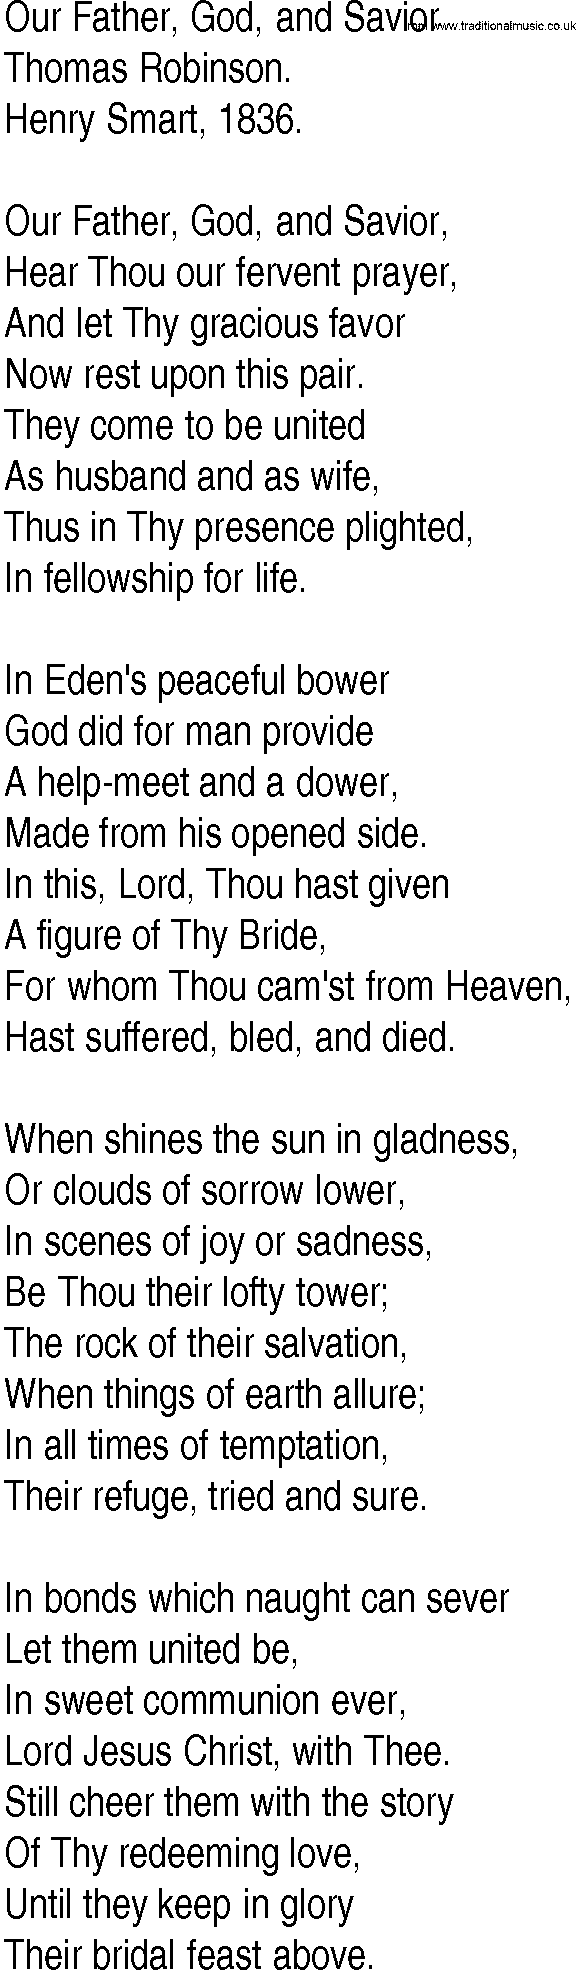 Hymn and Gospel Song: Our Father, God, and Savior by Thomas Robinson lyrics